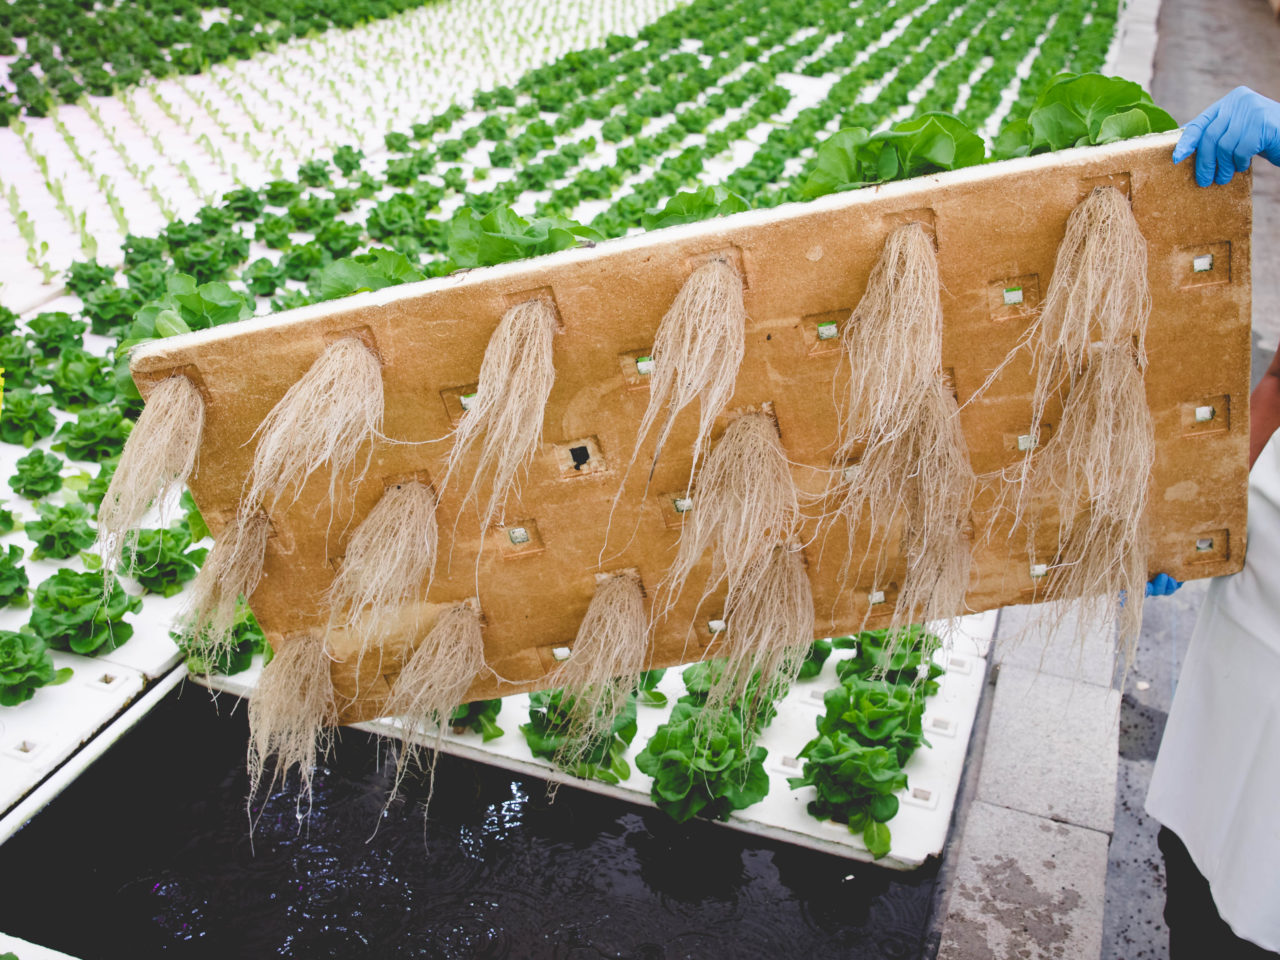 lettuce root system